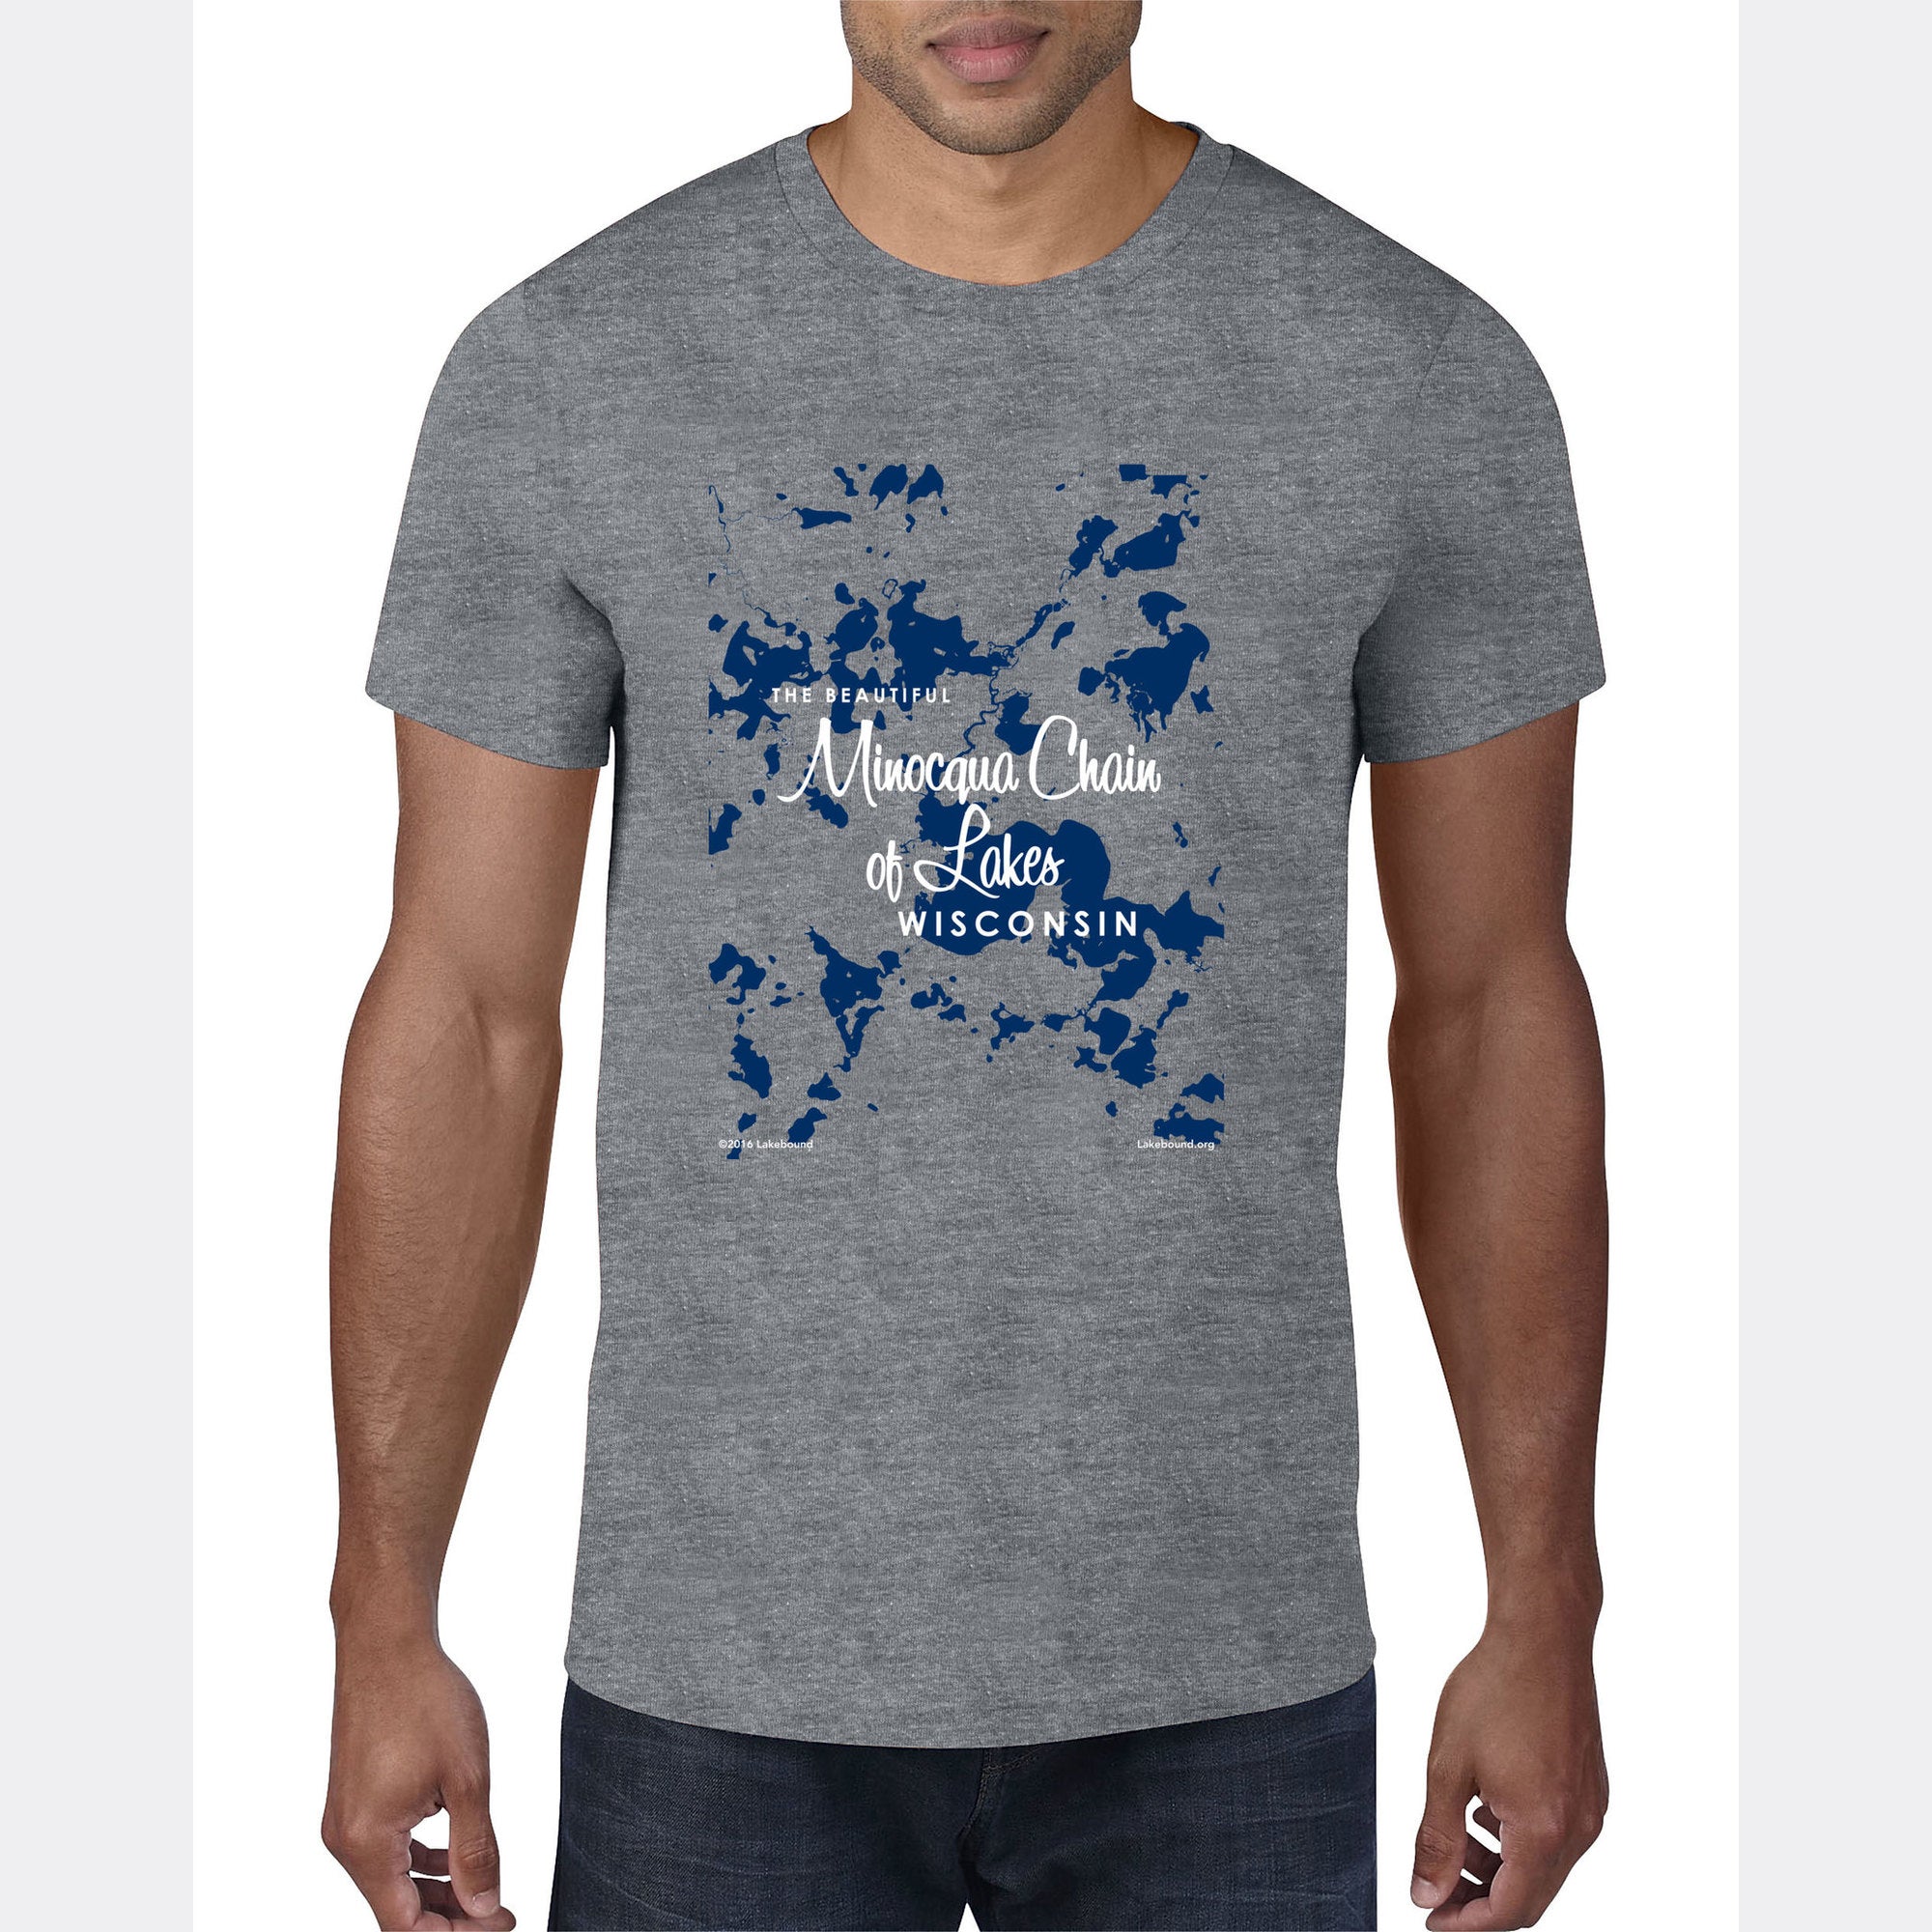 Minocqua Chain of Lakes Wisconsin, T-Shirt